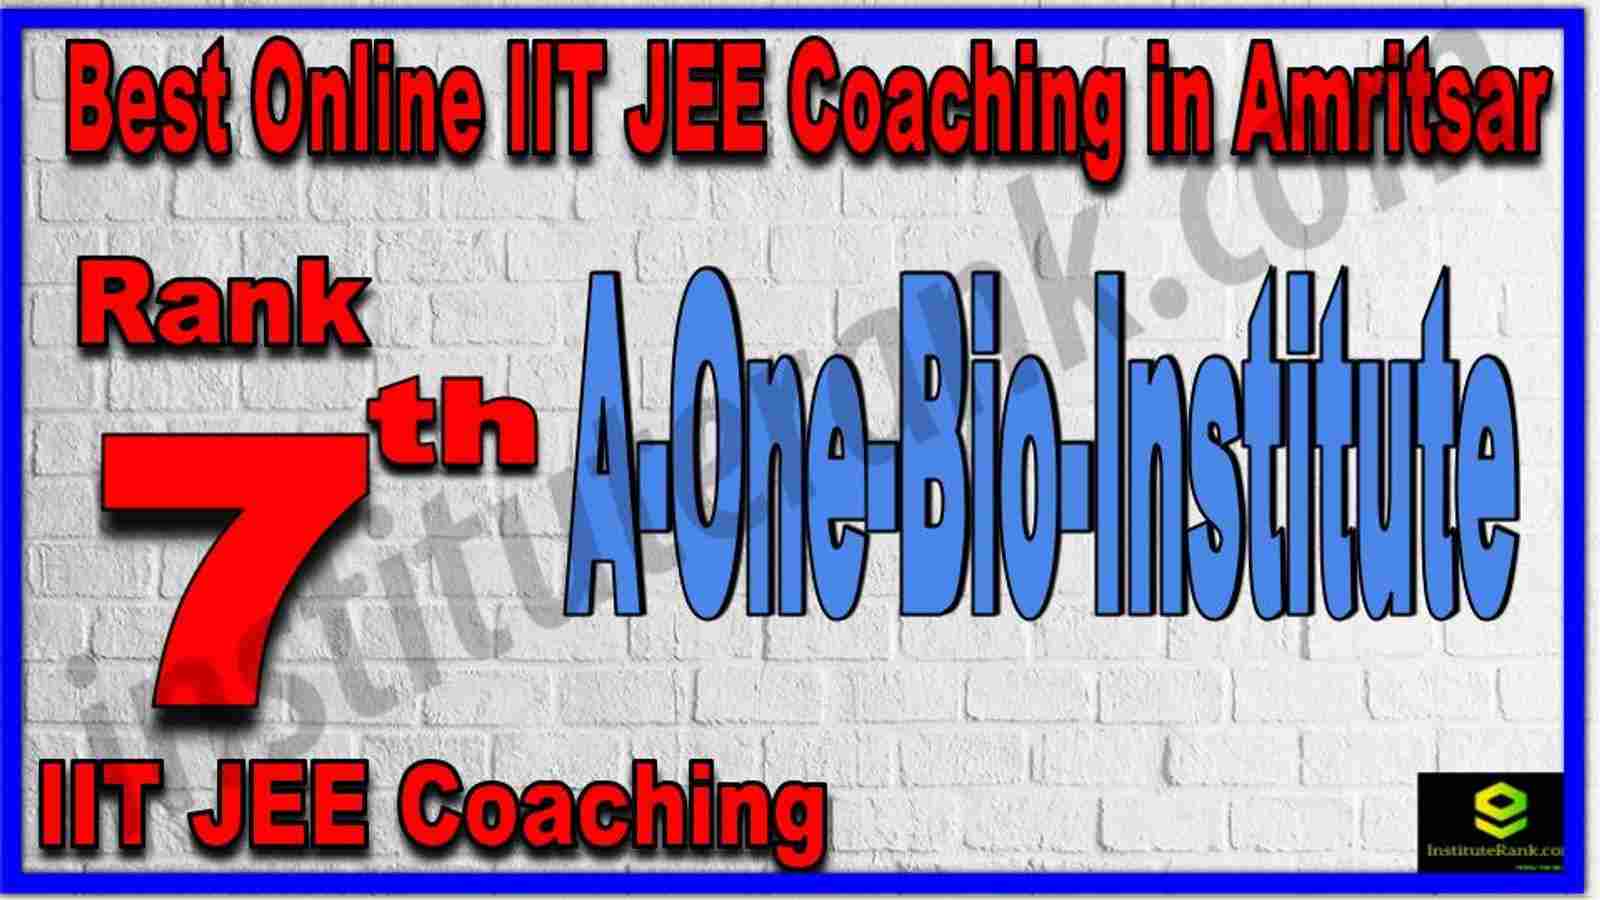 Rank 7th Best Online IIT JEE Coaching in Amritsar